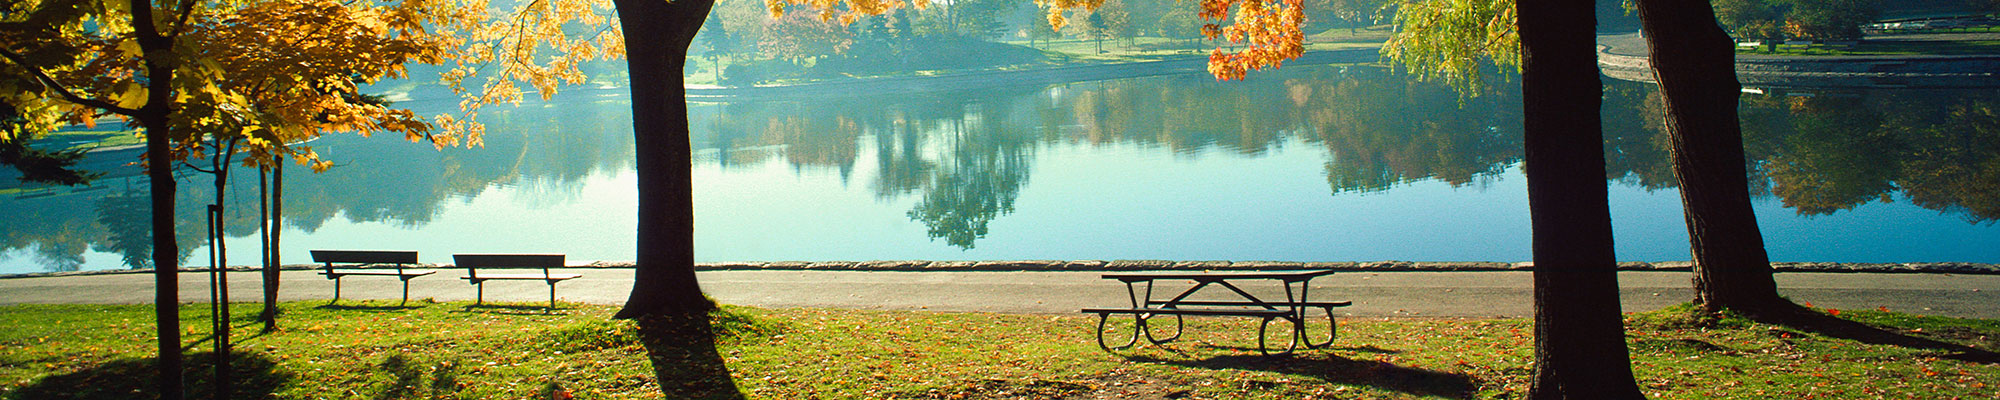 park bench beside a lake